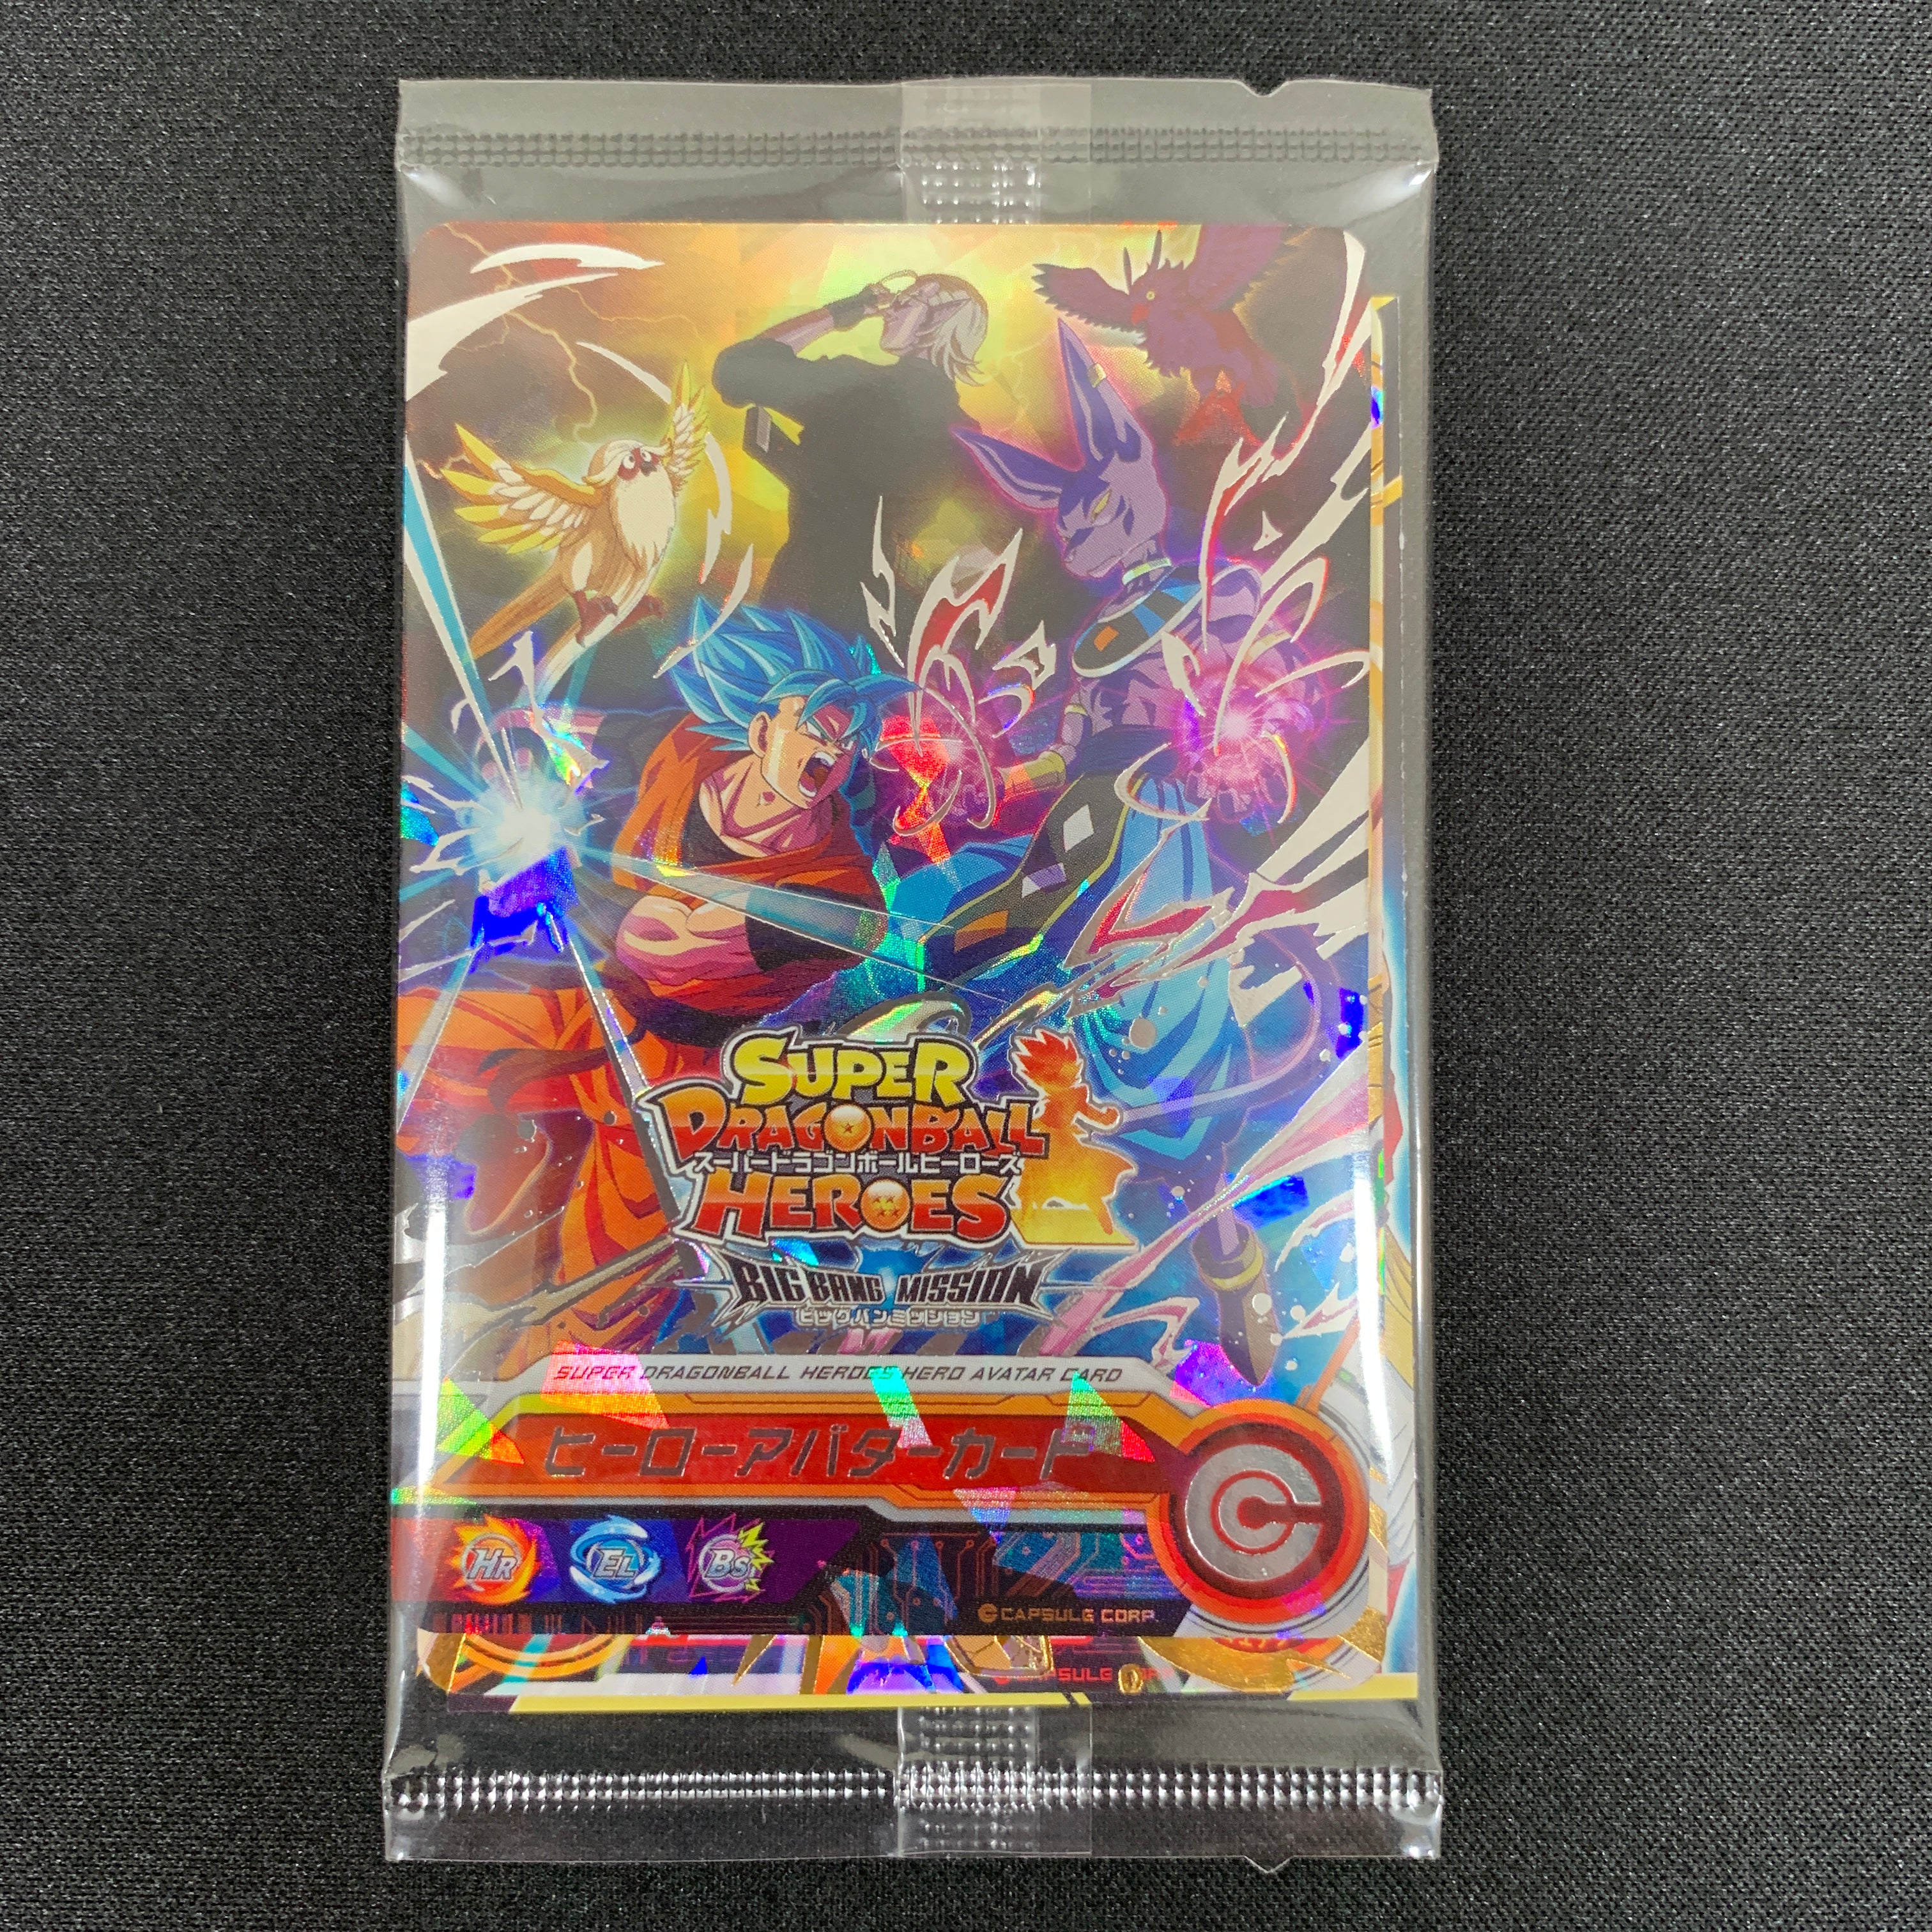 SUPER DRAGON BALL HEROES BMP-01 & Avatar card set Son Goku